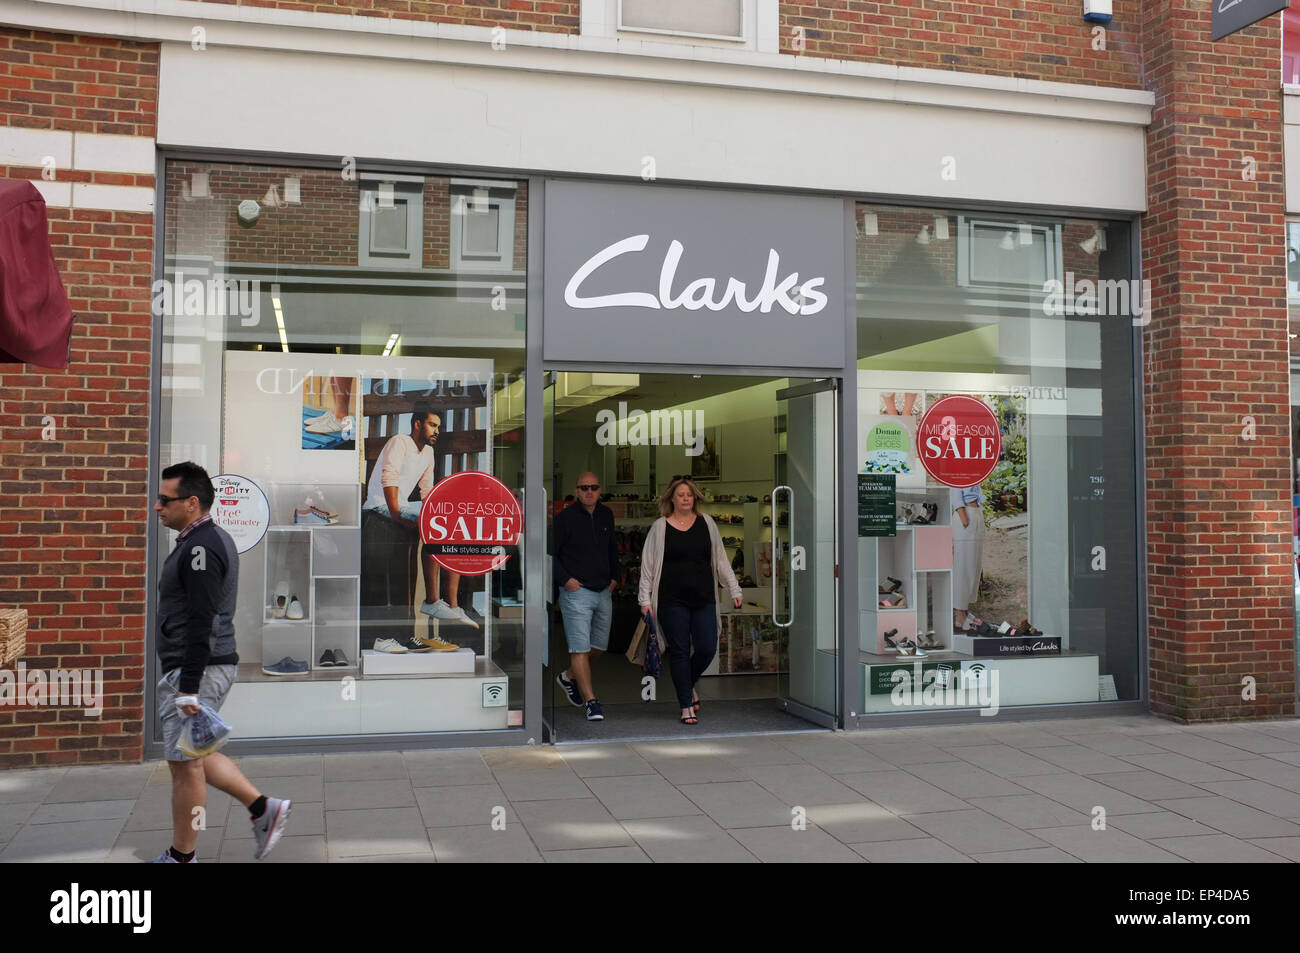 clarks uk sale 2015